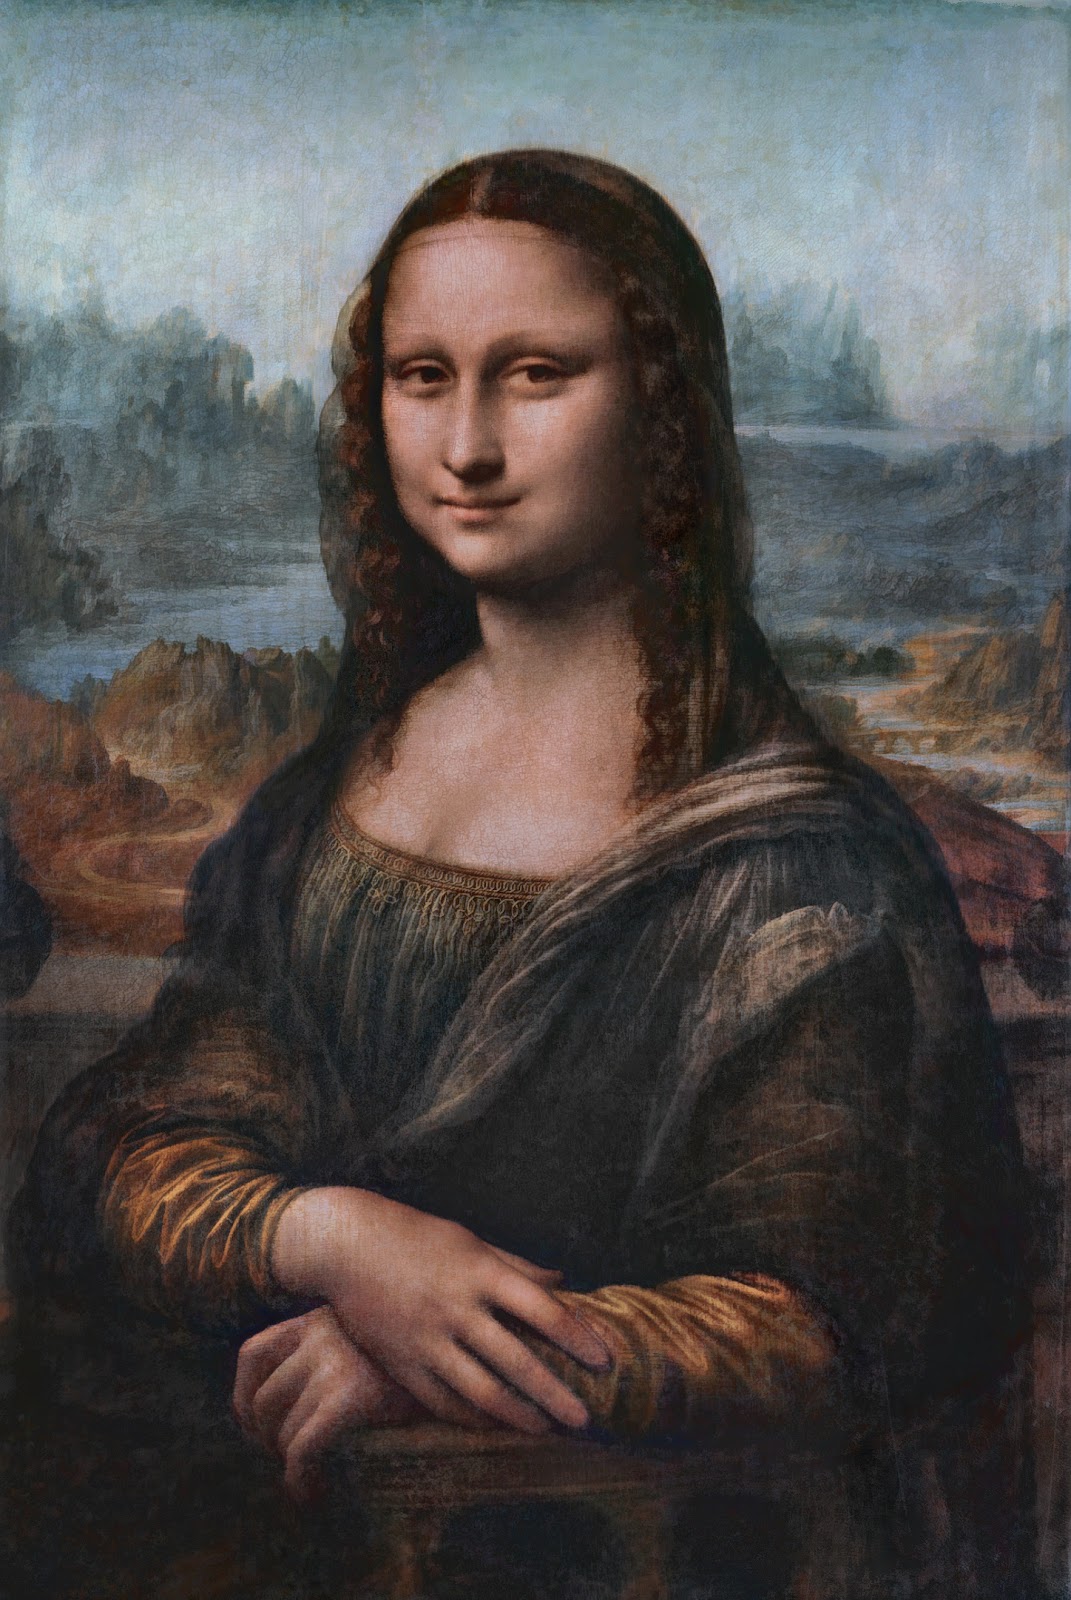 Leonardo da Vinci Mona Lisa with original colors approximation